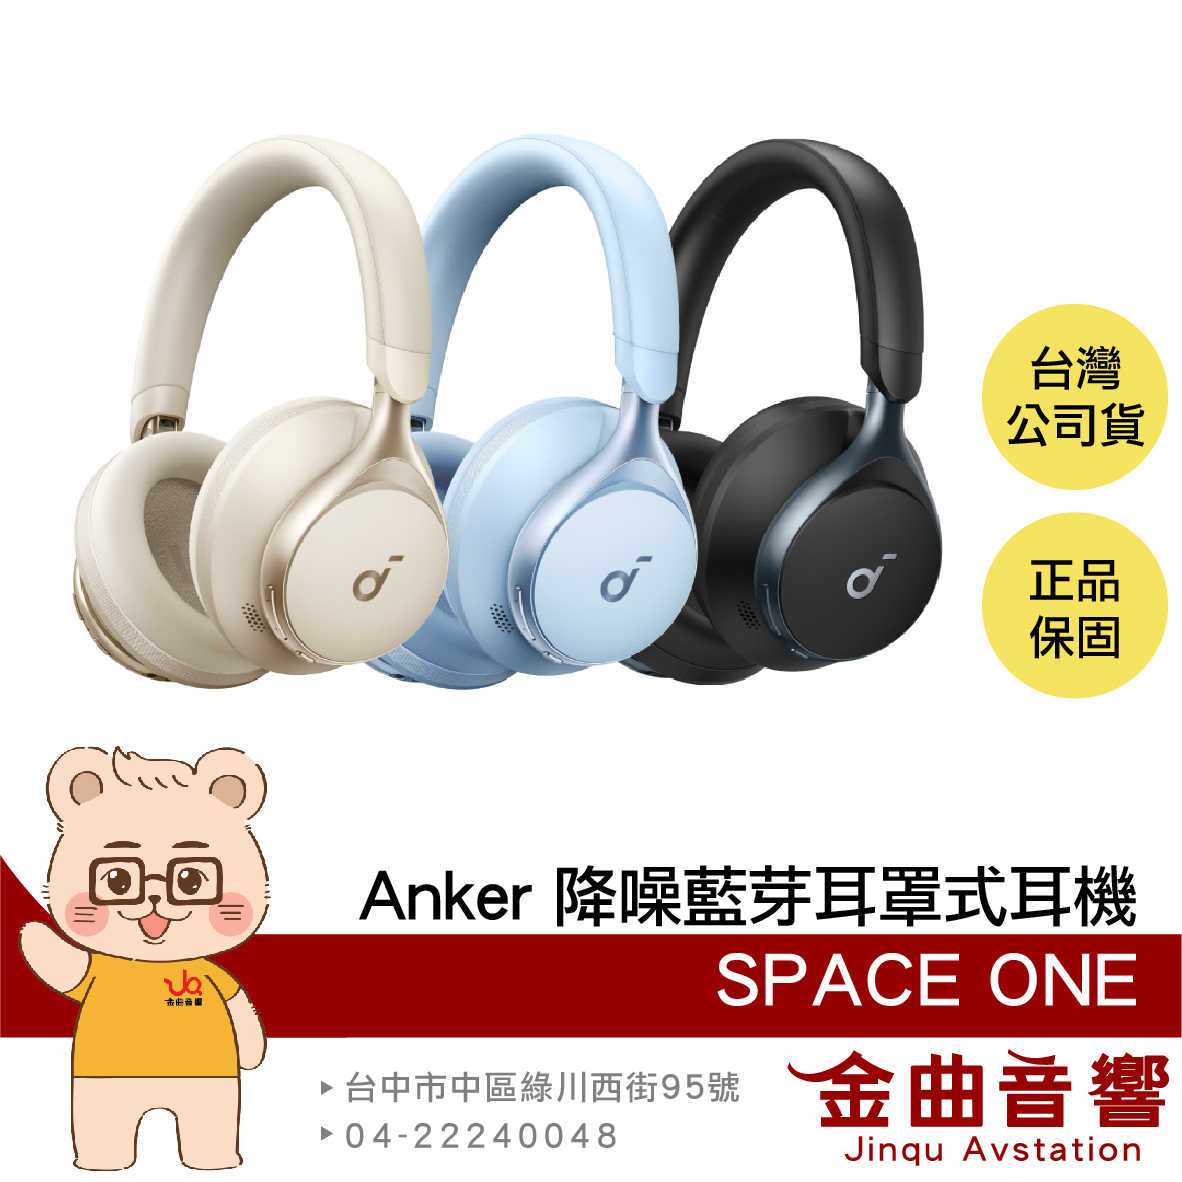 Anker Soundcore Space One 雙金標認證 聽紋辨識 降噪 藍芽 耳罩式耳機 | 金曲音響